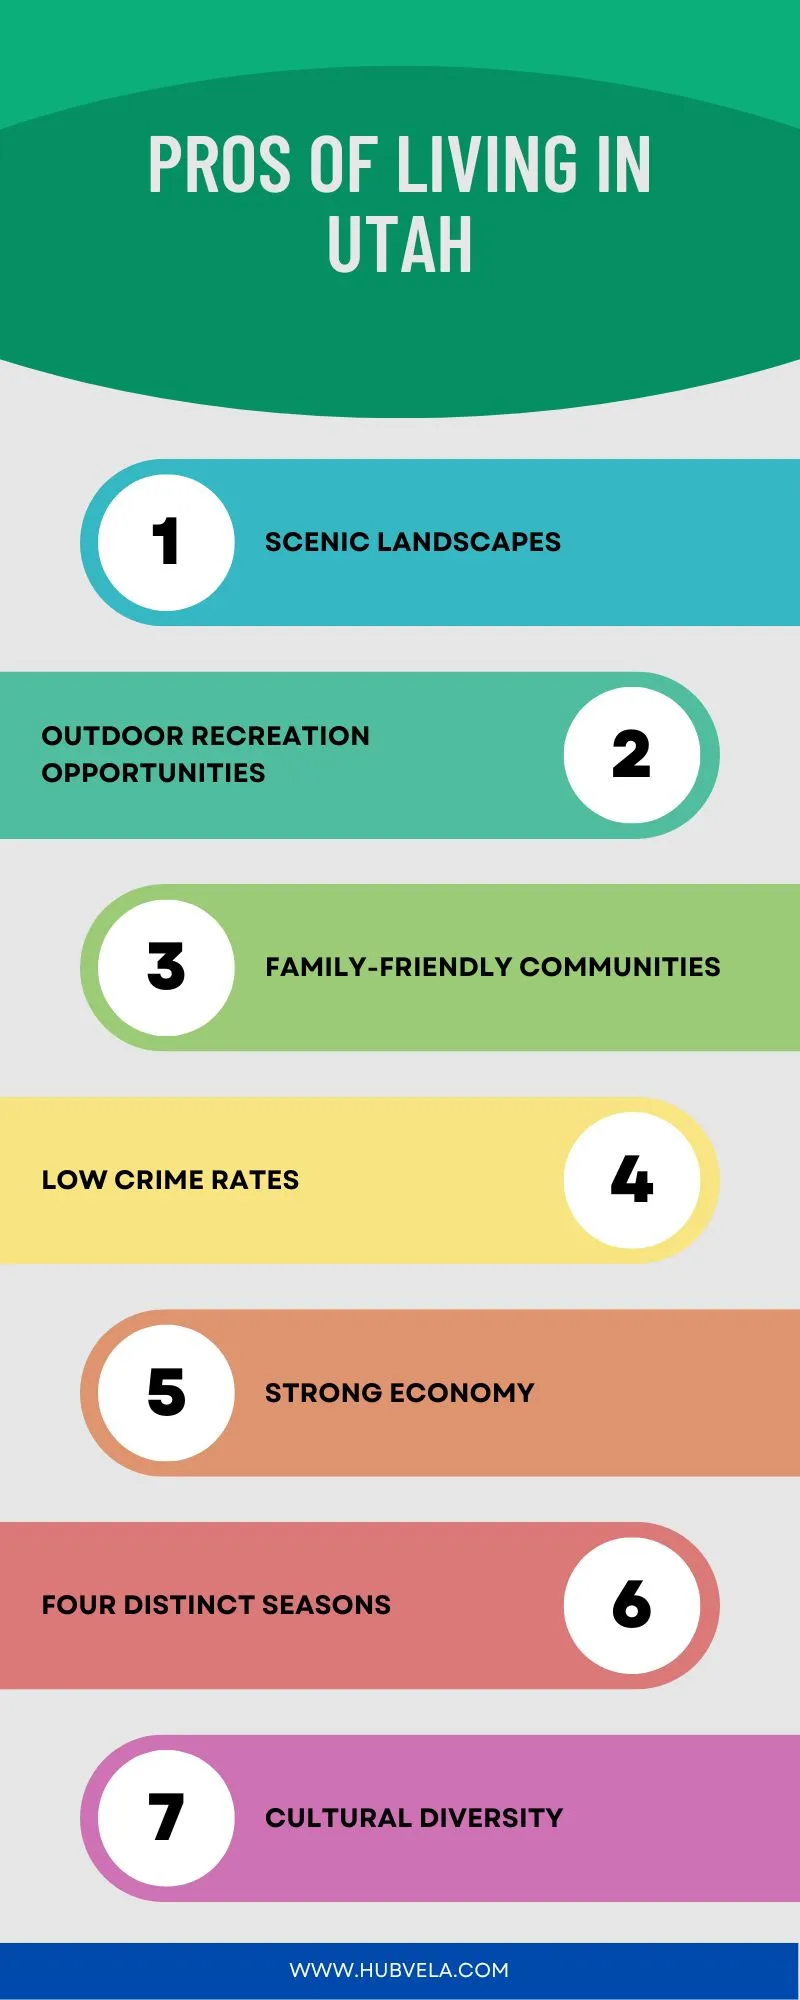 Pros of Living in Utah Infographic